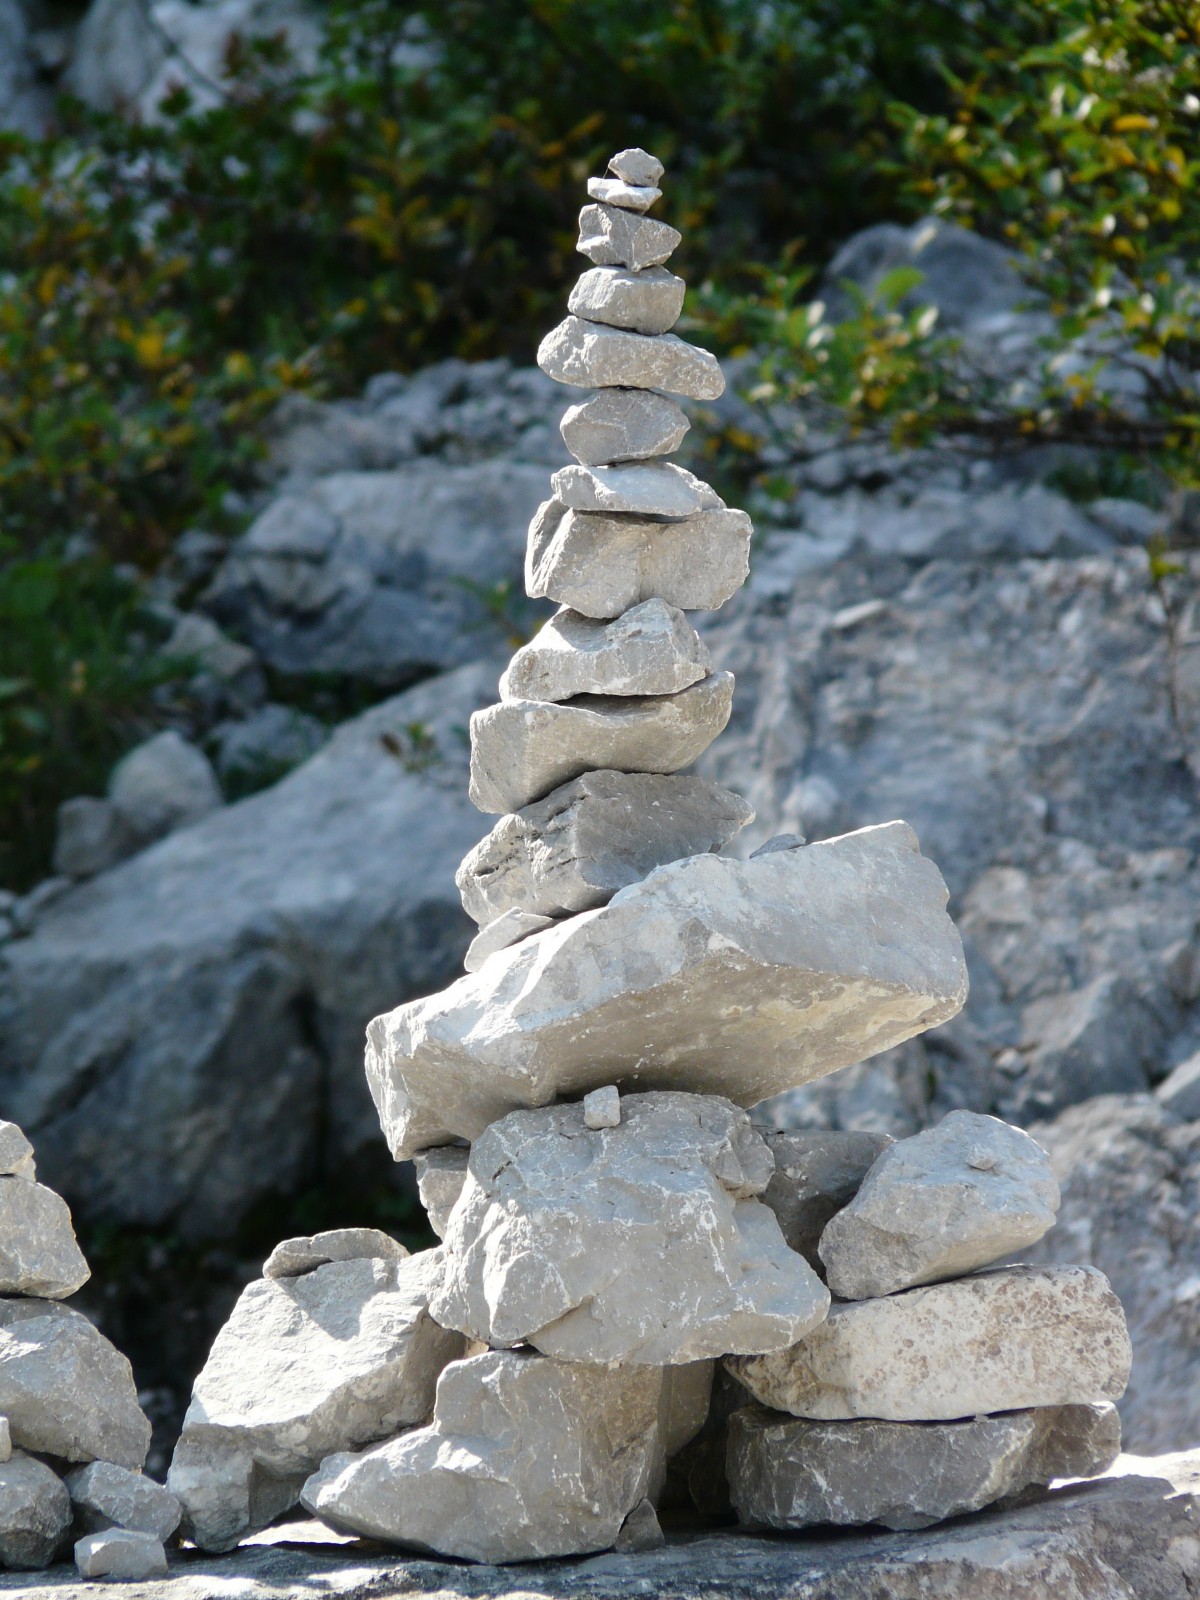 A rock sculpture positioned on a big flat rock.